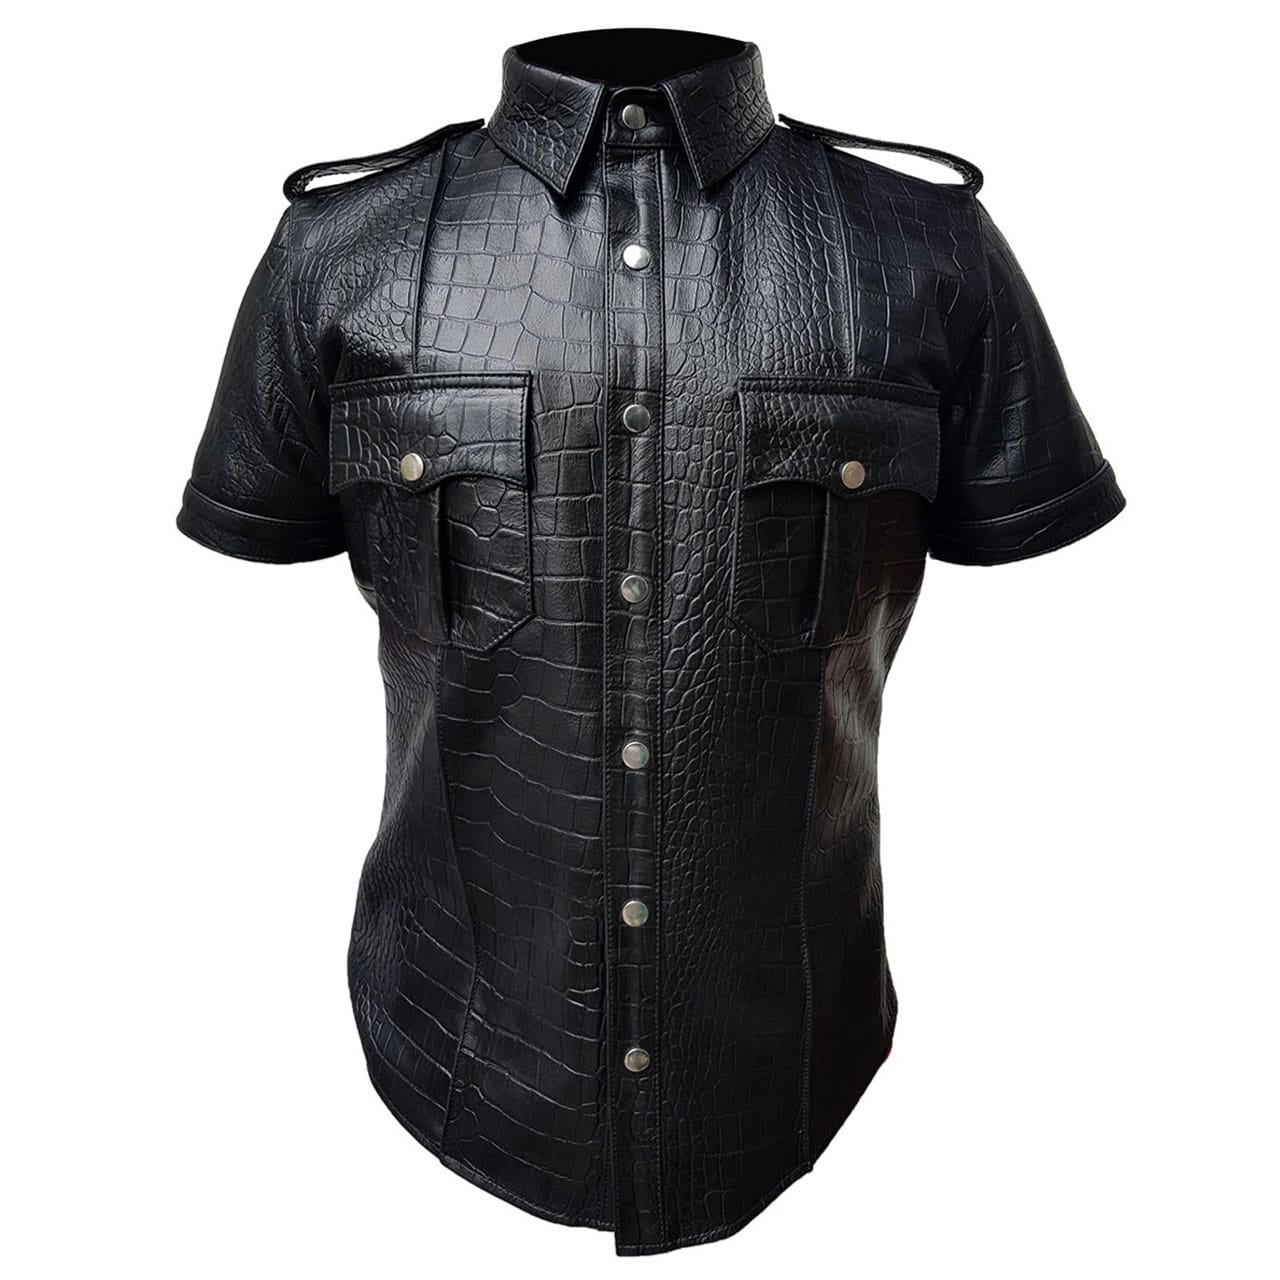 Mens Police Uniform Style Crocodile Print Leather Shirt - PSHS-BLK